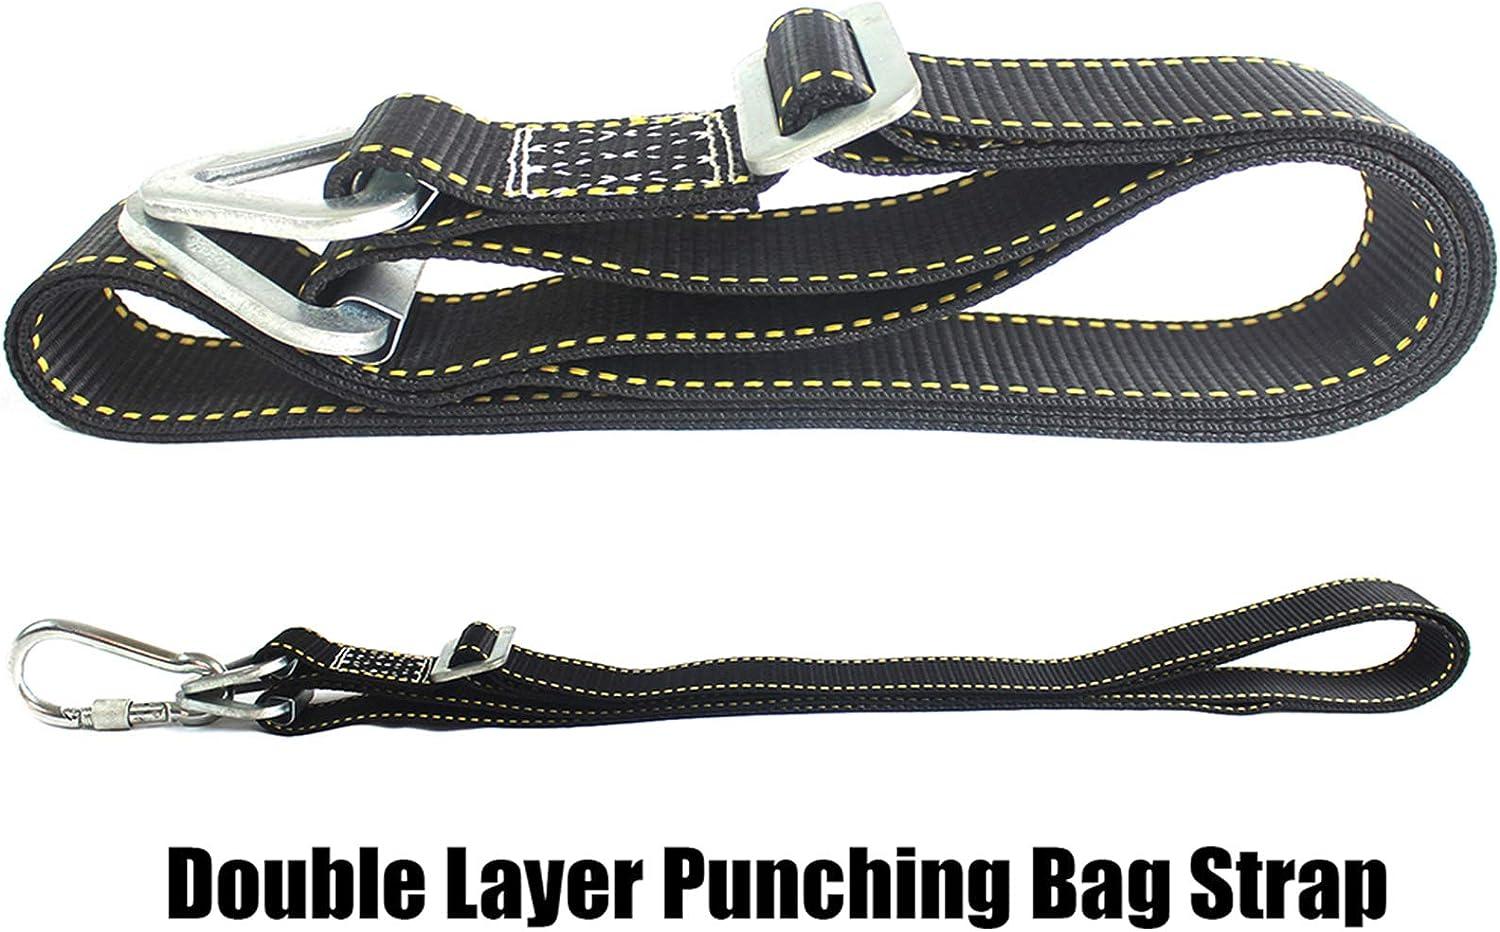 PLAYGOGYM Heavy Bag Strap Hanger - Heavy Duty Punching Bag Hanger Strap  Mount - Boxing Bag Hanging Strap